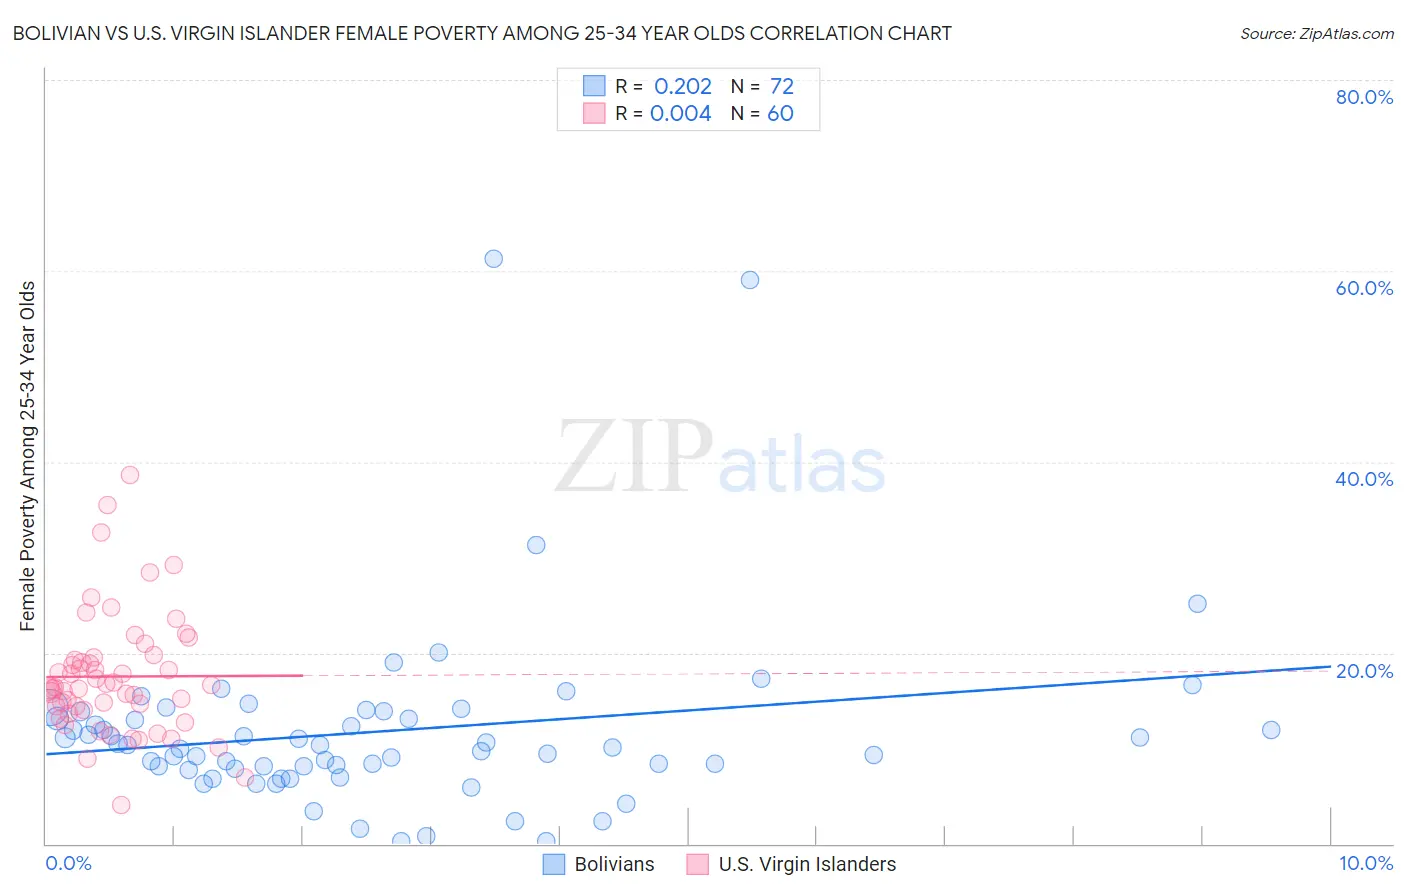 Bolivian vs U.S. Virgin Islander Female Poverty Among 25-34 Year Olds